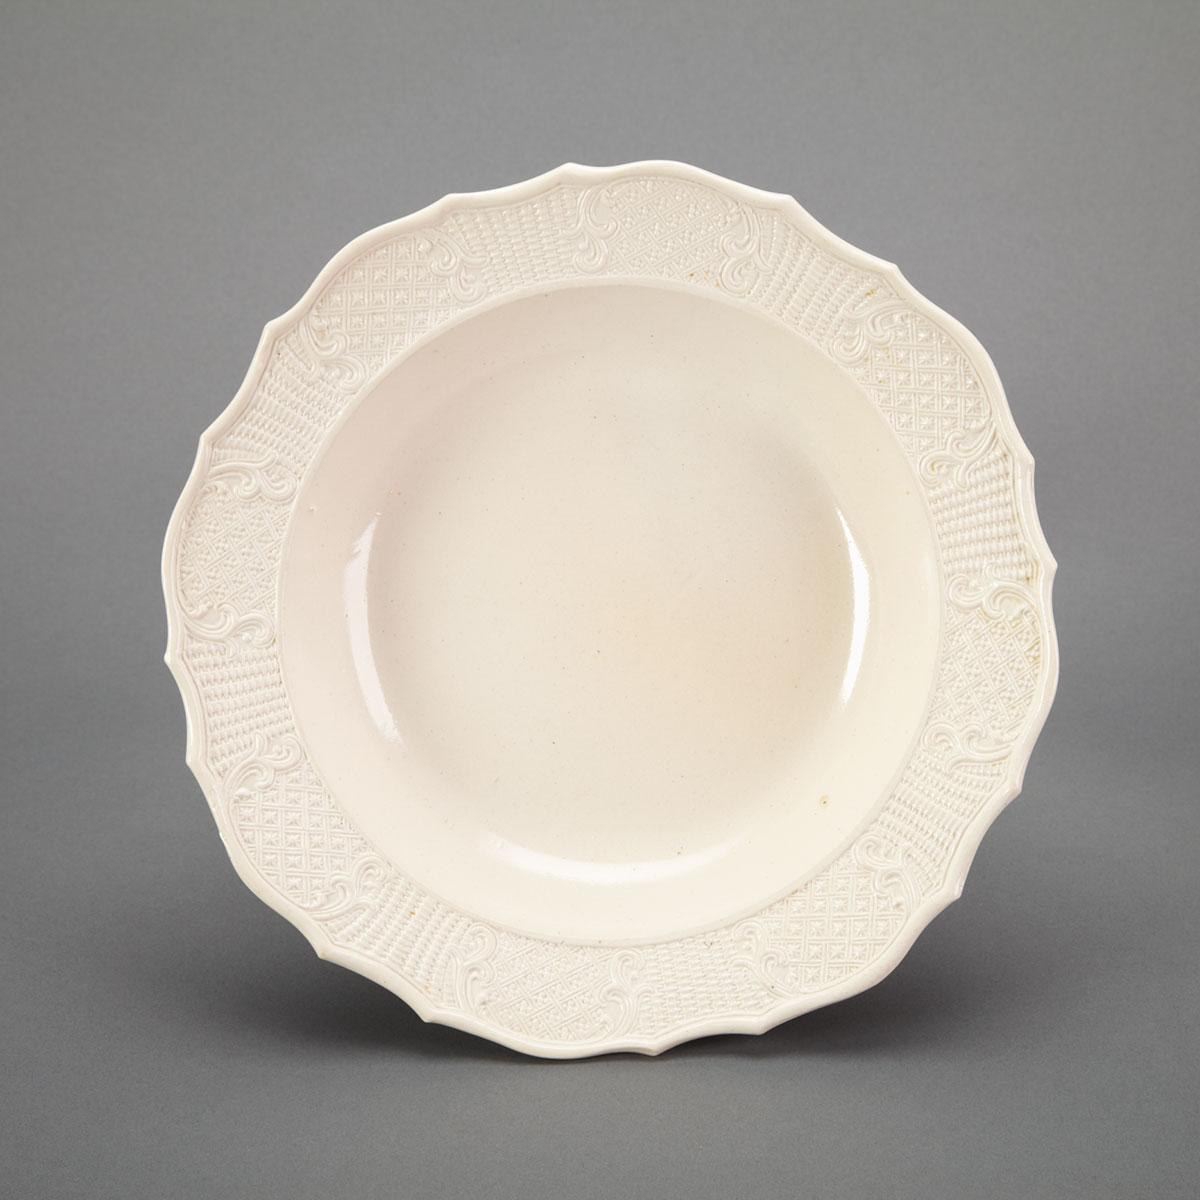 Staffordshire White Salt-Glazed Stoneware Soup Plate, c.1760-70